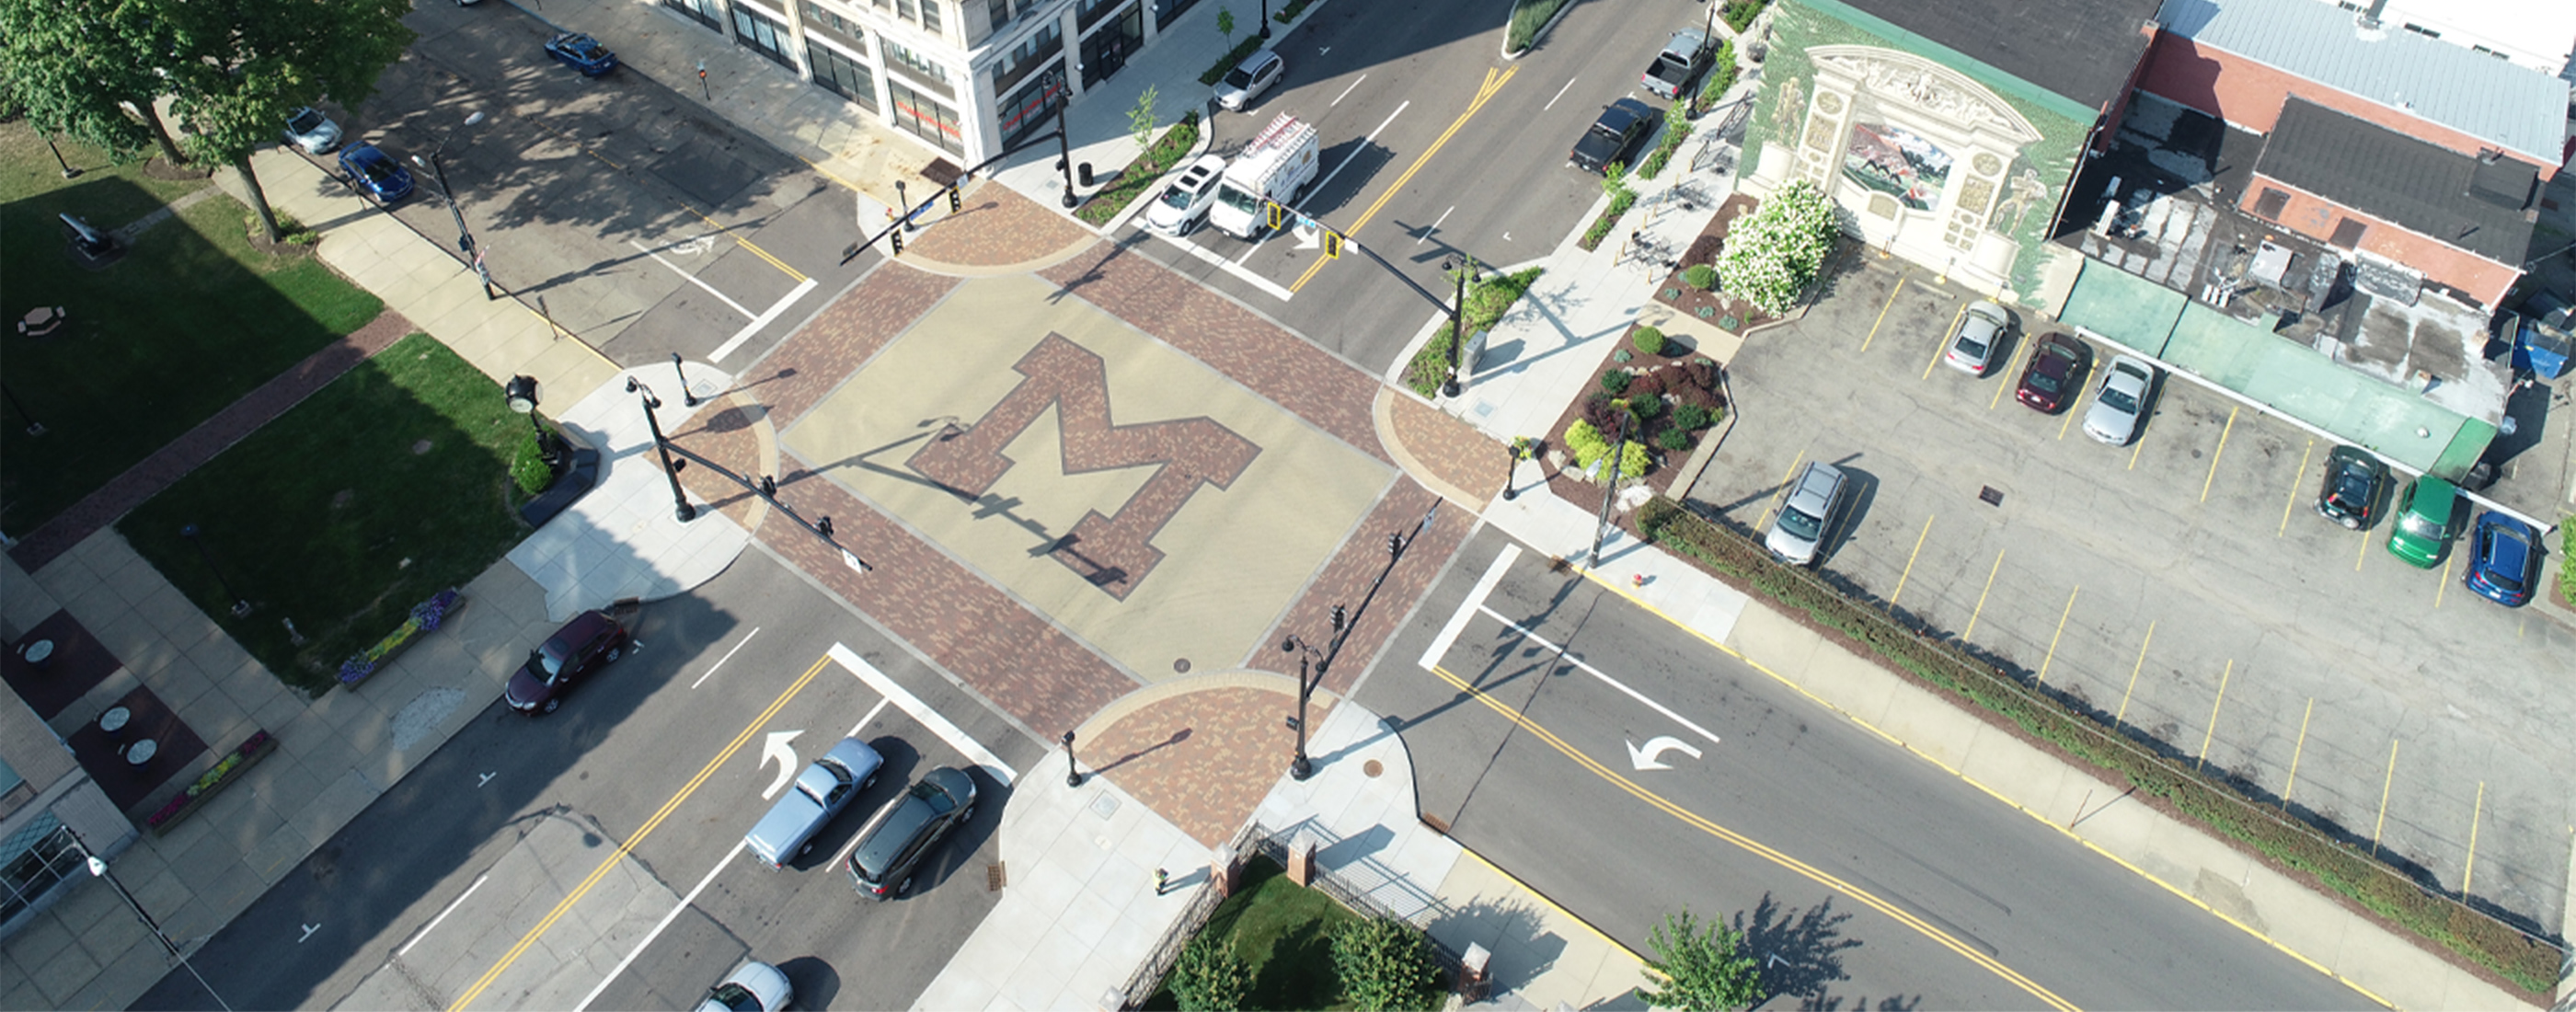 Aerial streetview of City of Massillon "M" branding